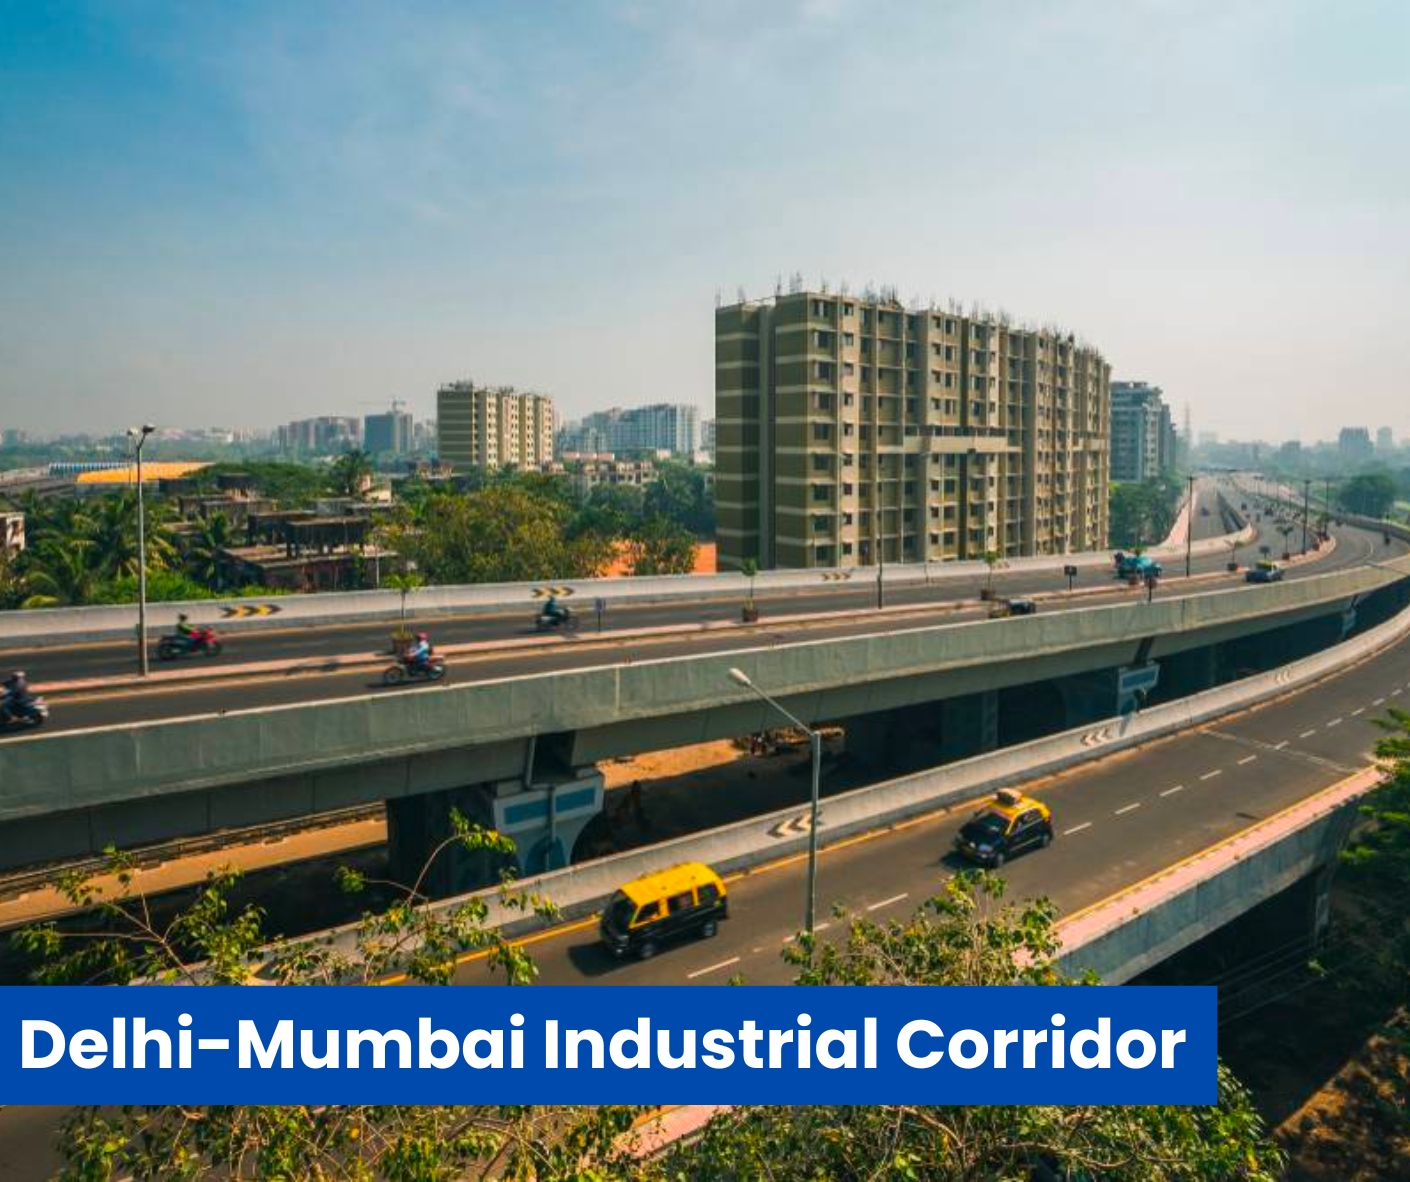 Delhi-Mumbai industrial corridor